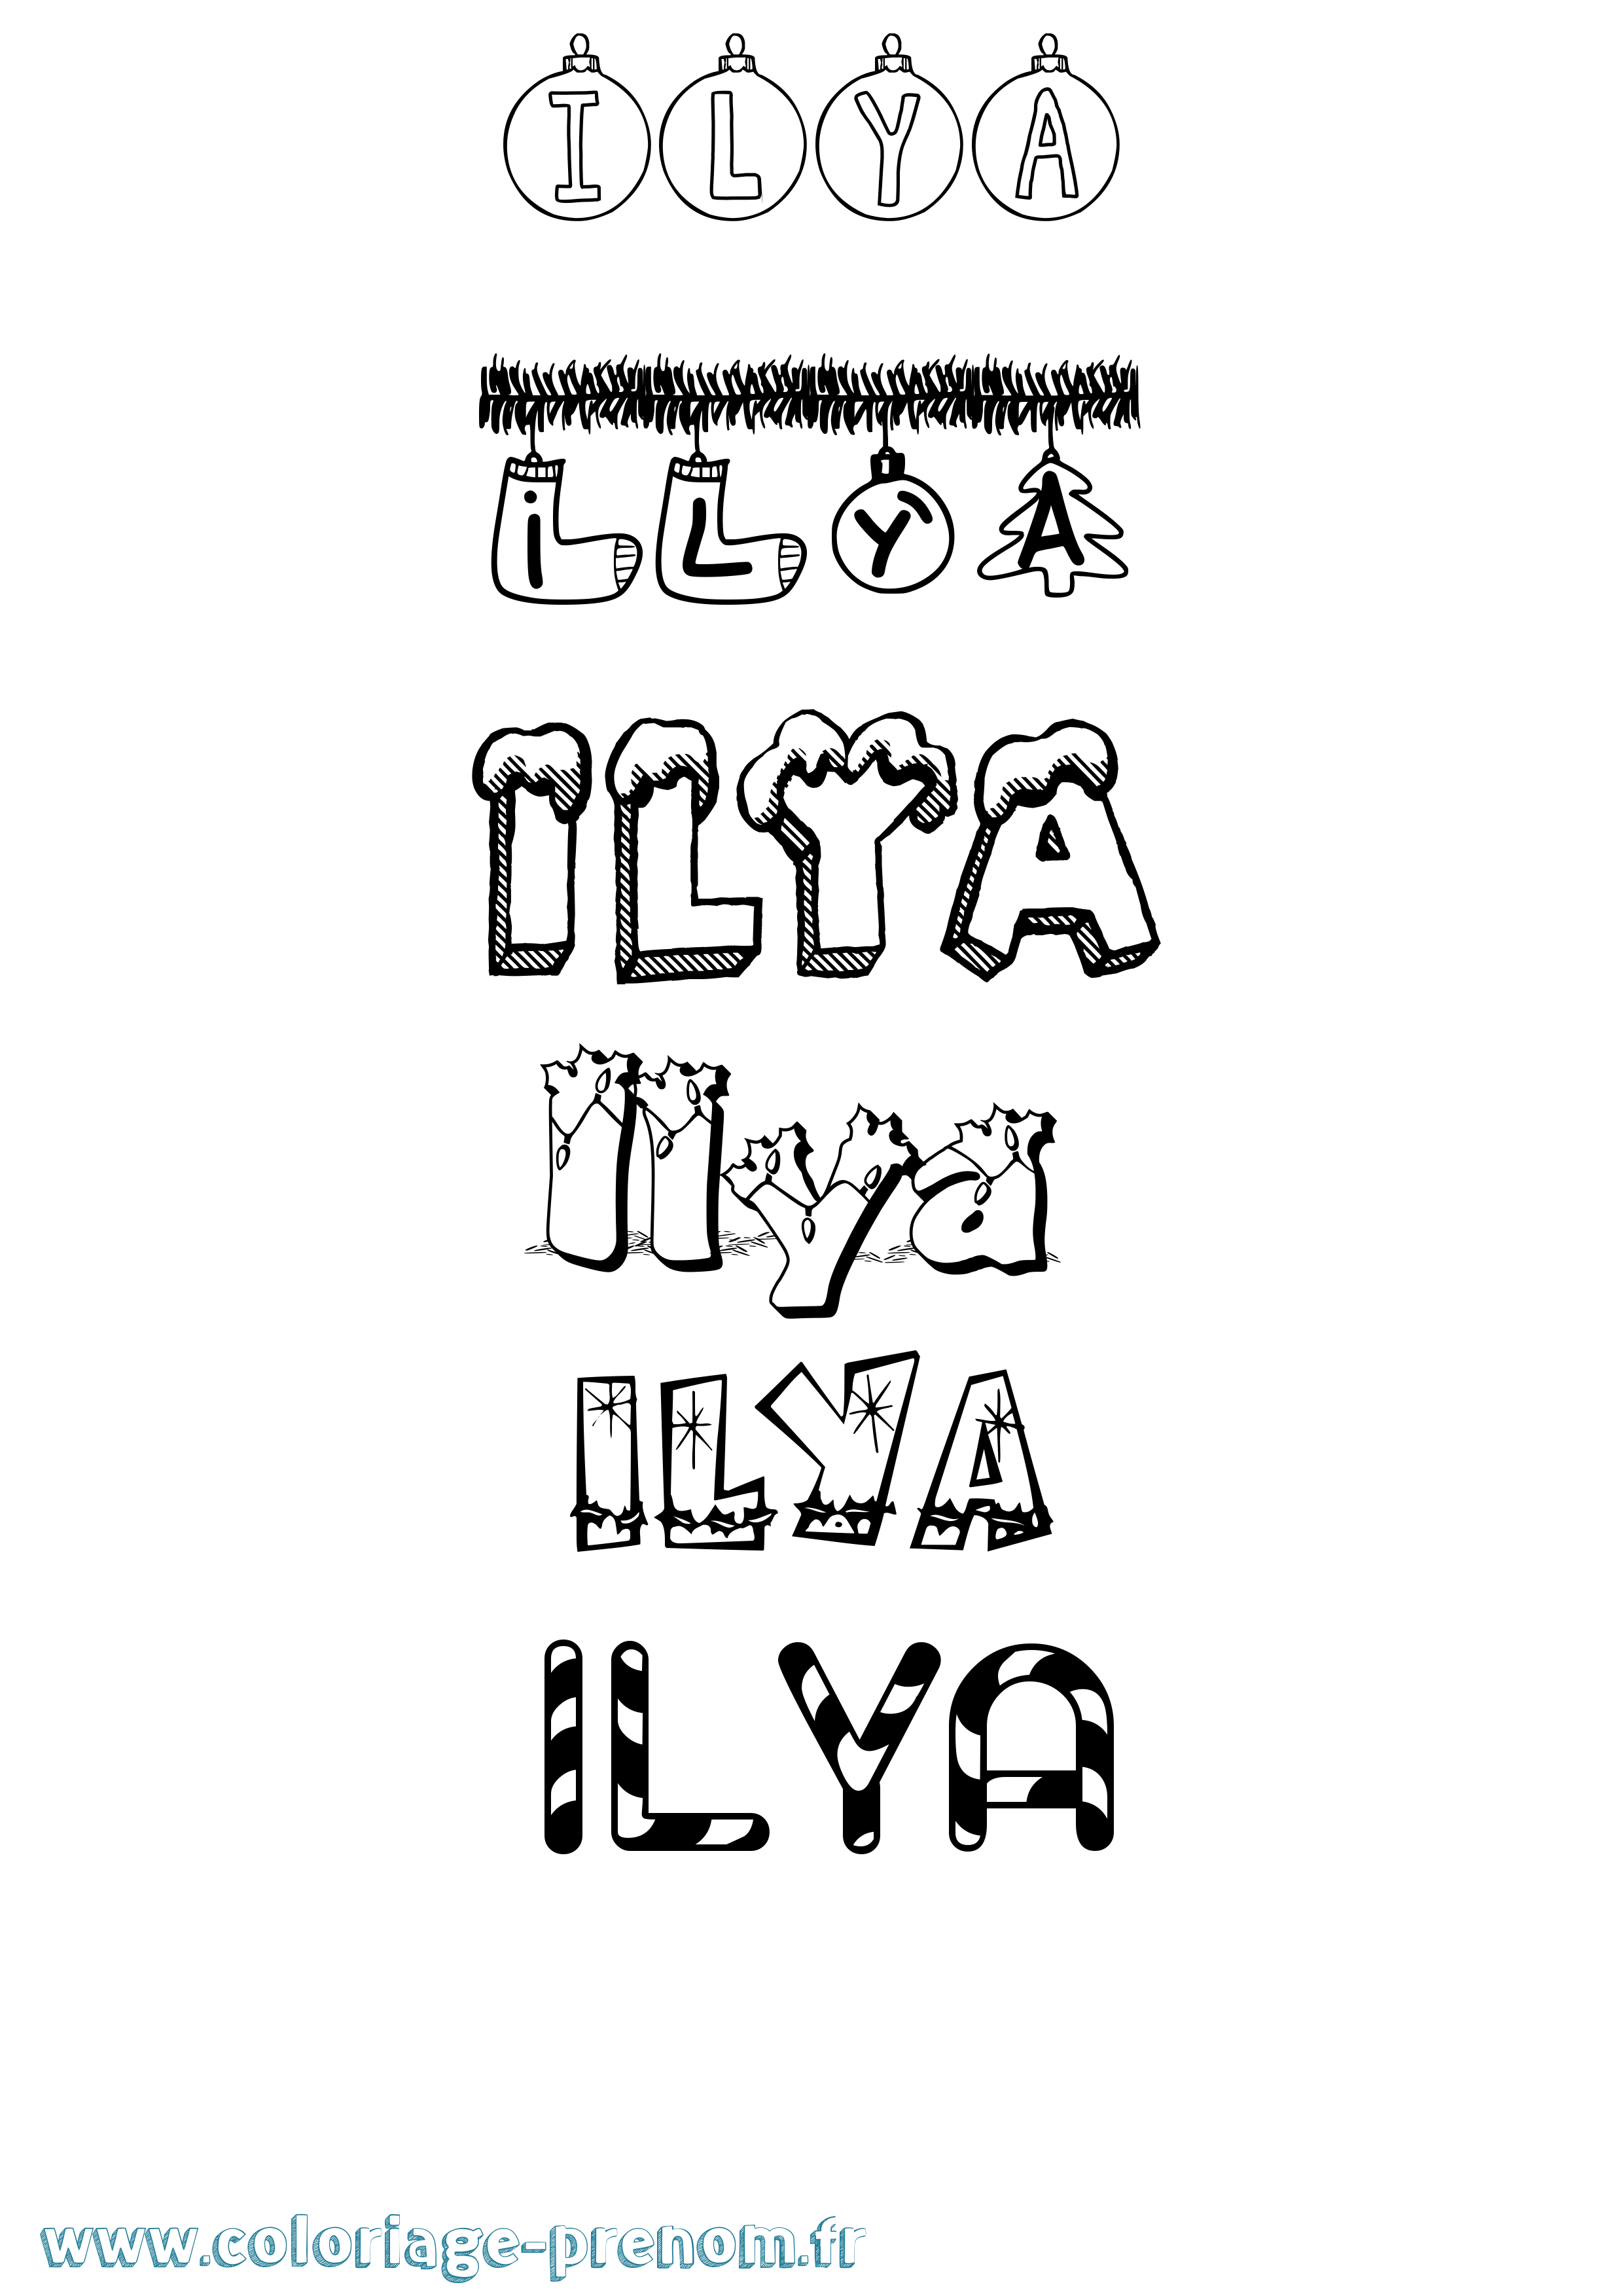 Coloriage prénom Ilya